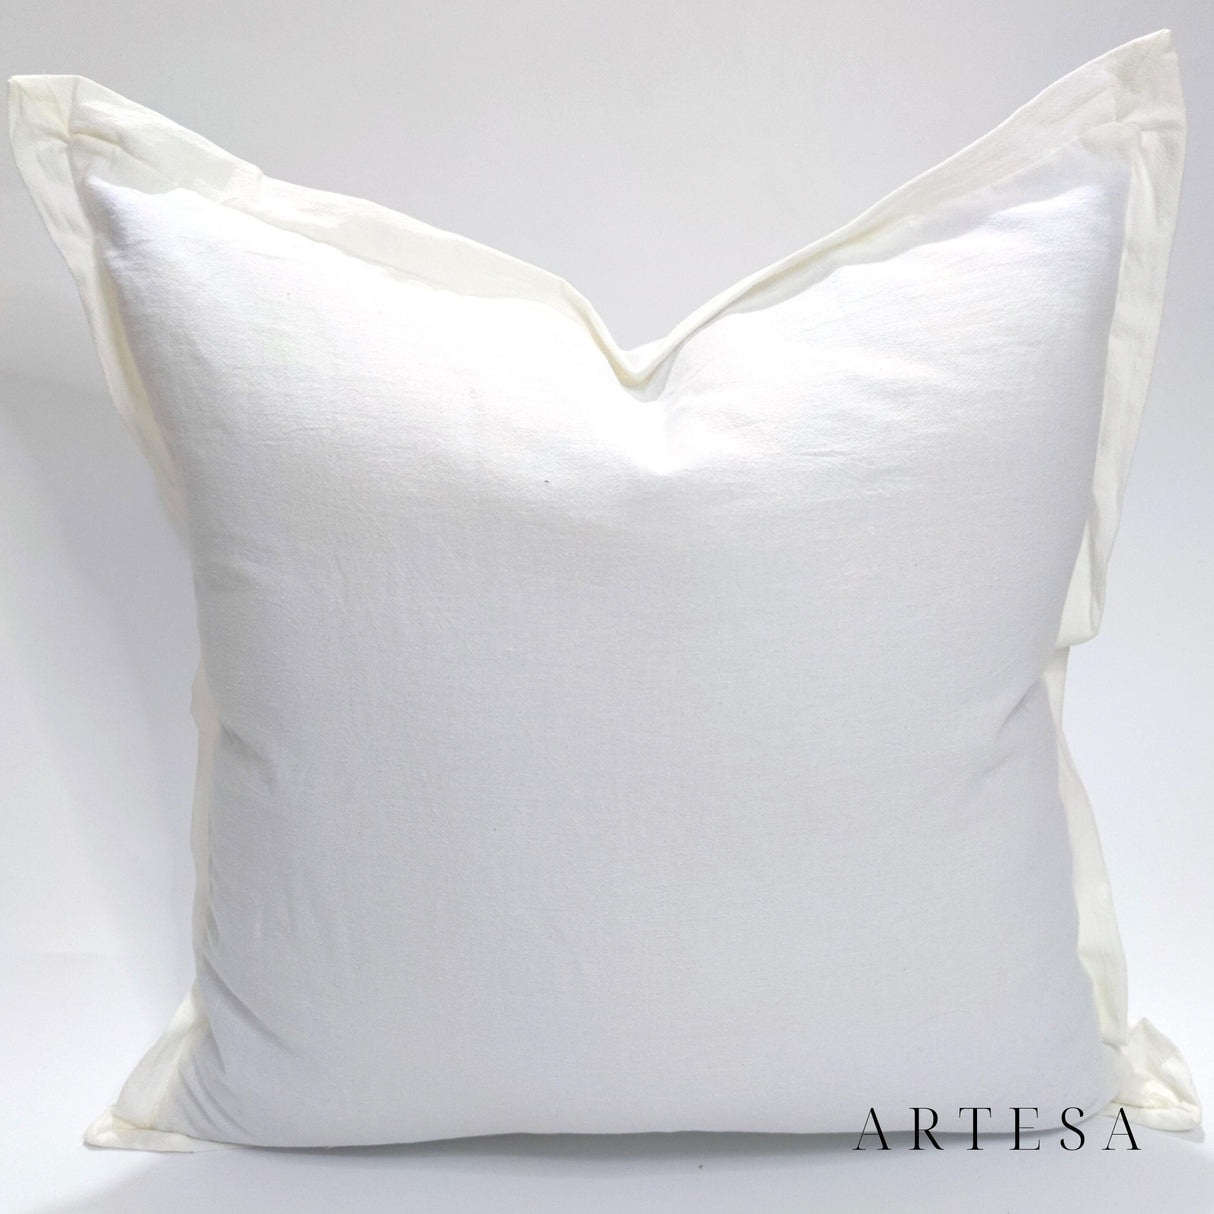 Artesa Cotton Linen in Plain Off White Throw Pillow Cover